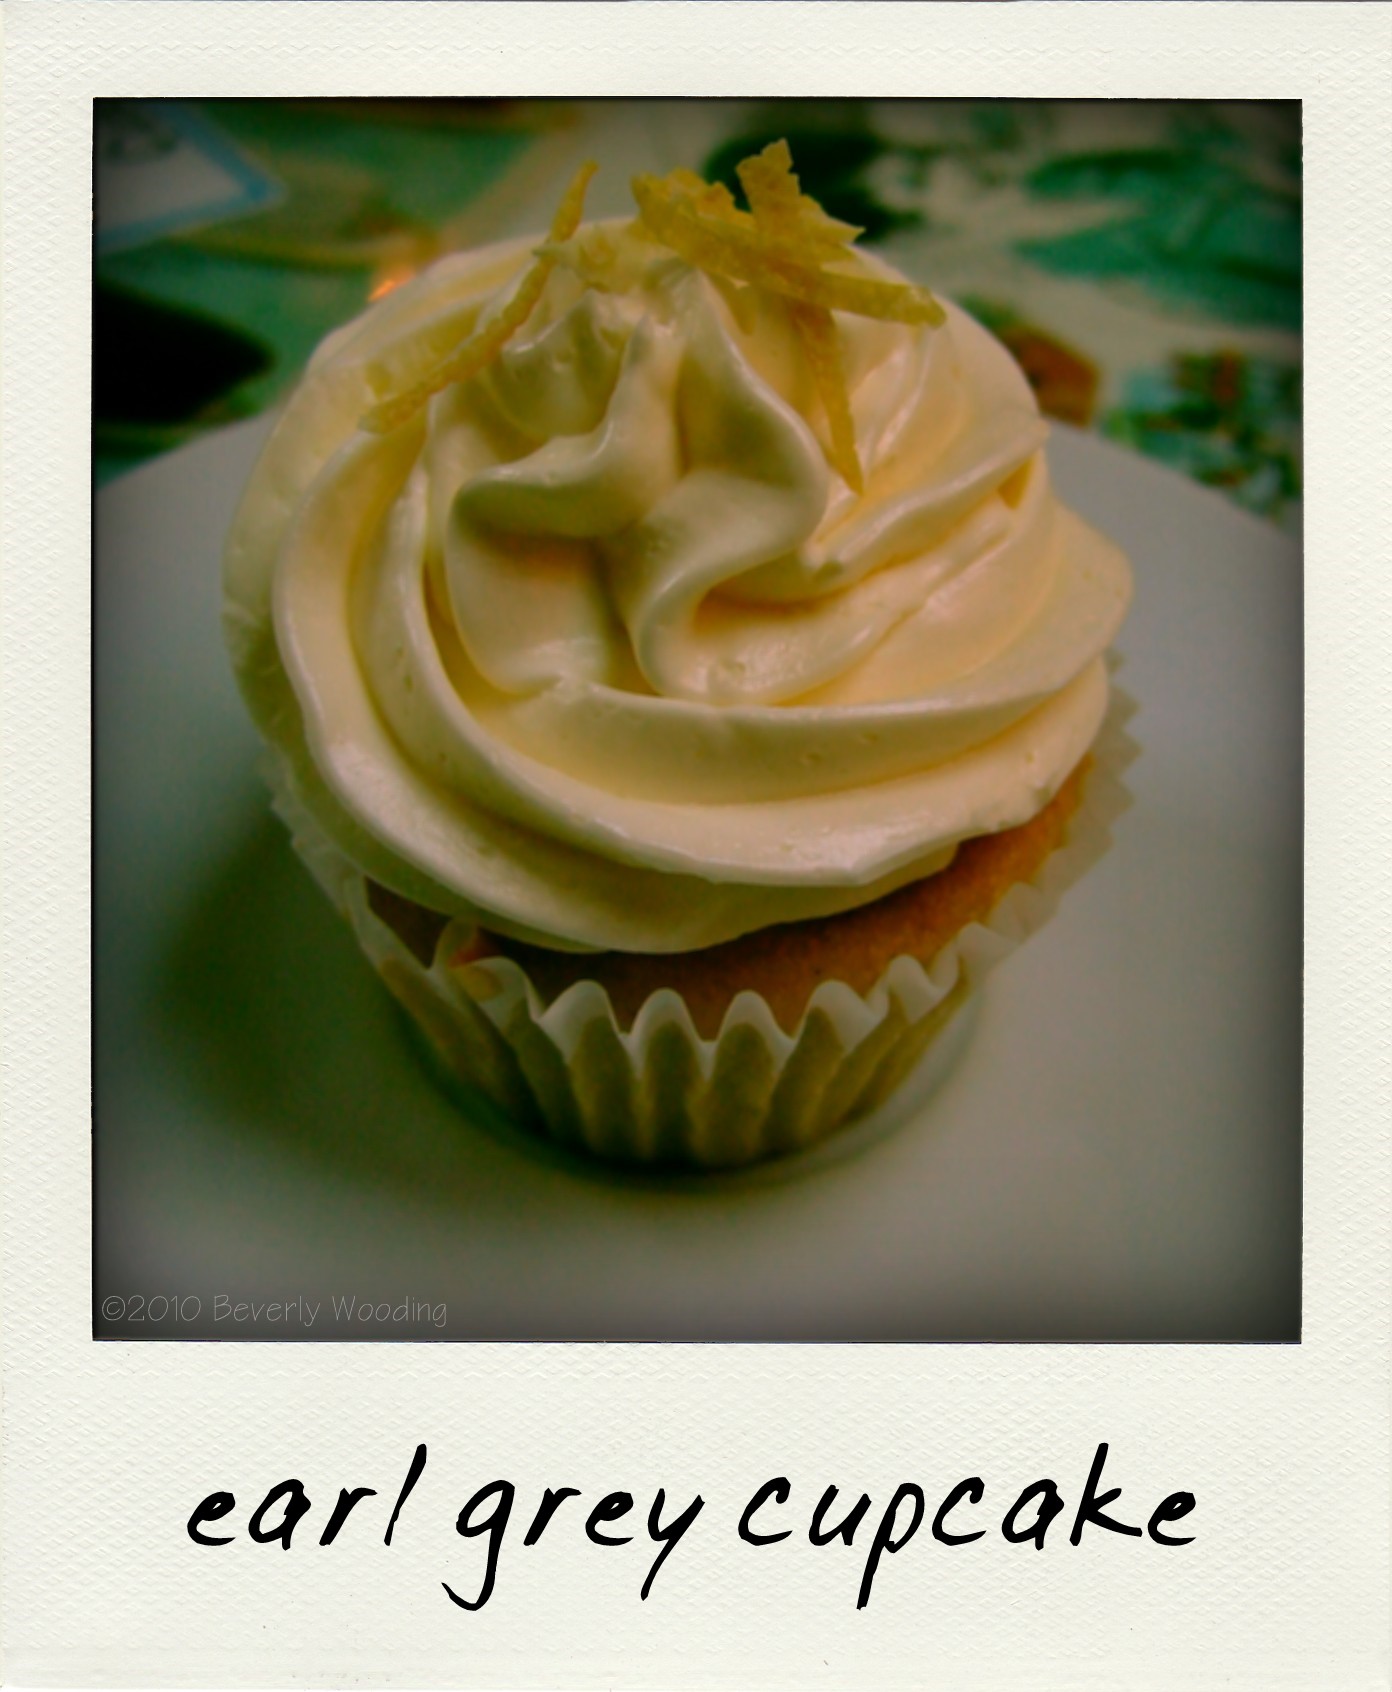 Earl Grey cupcake